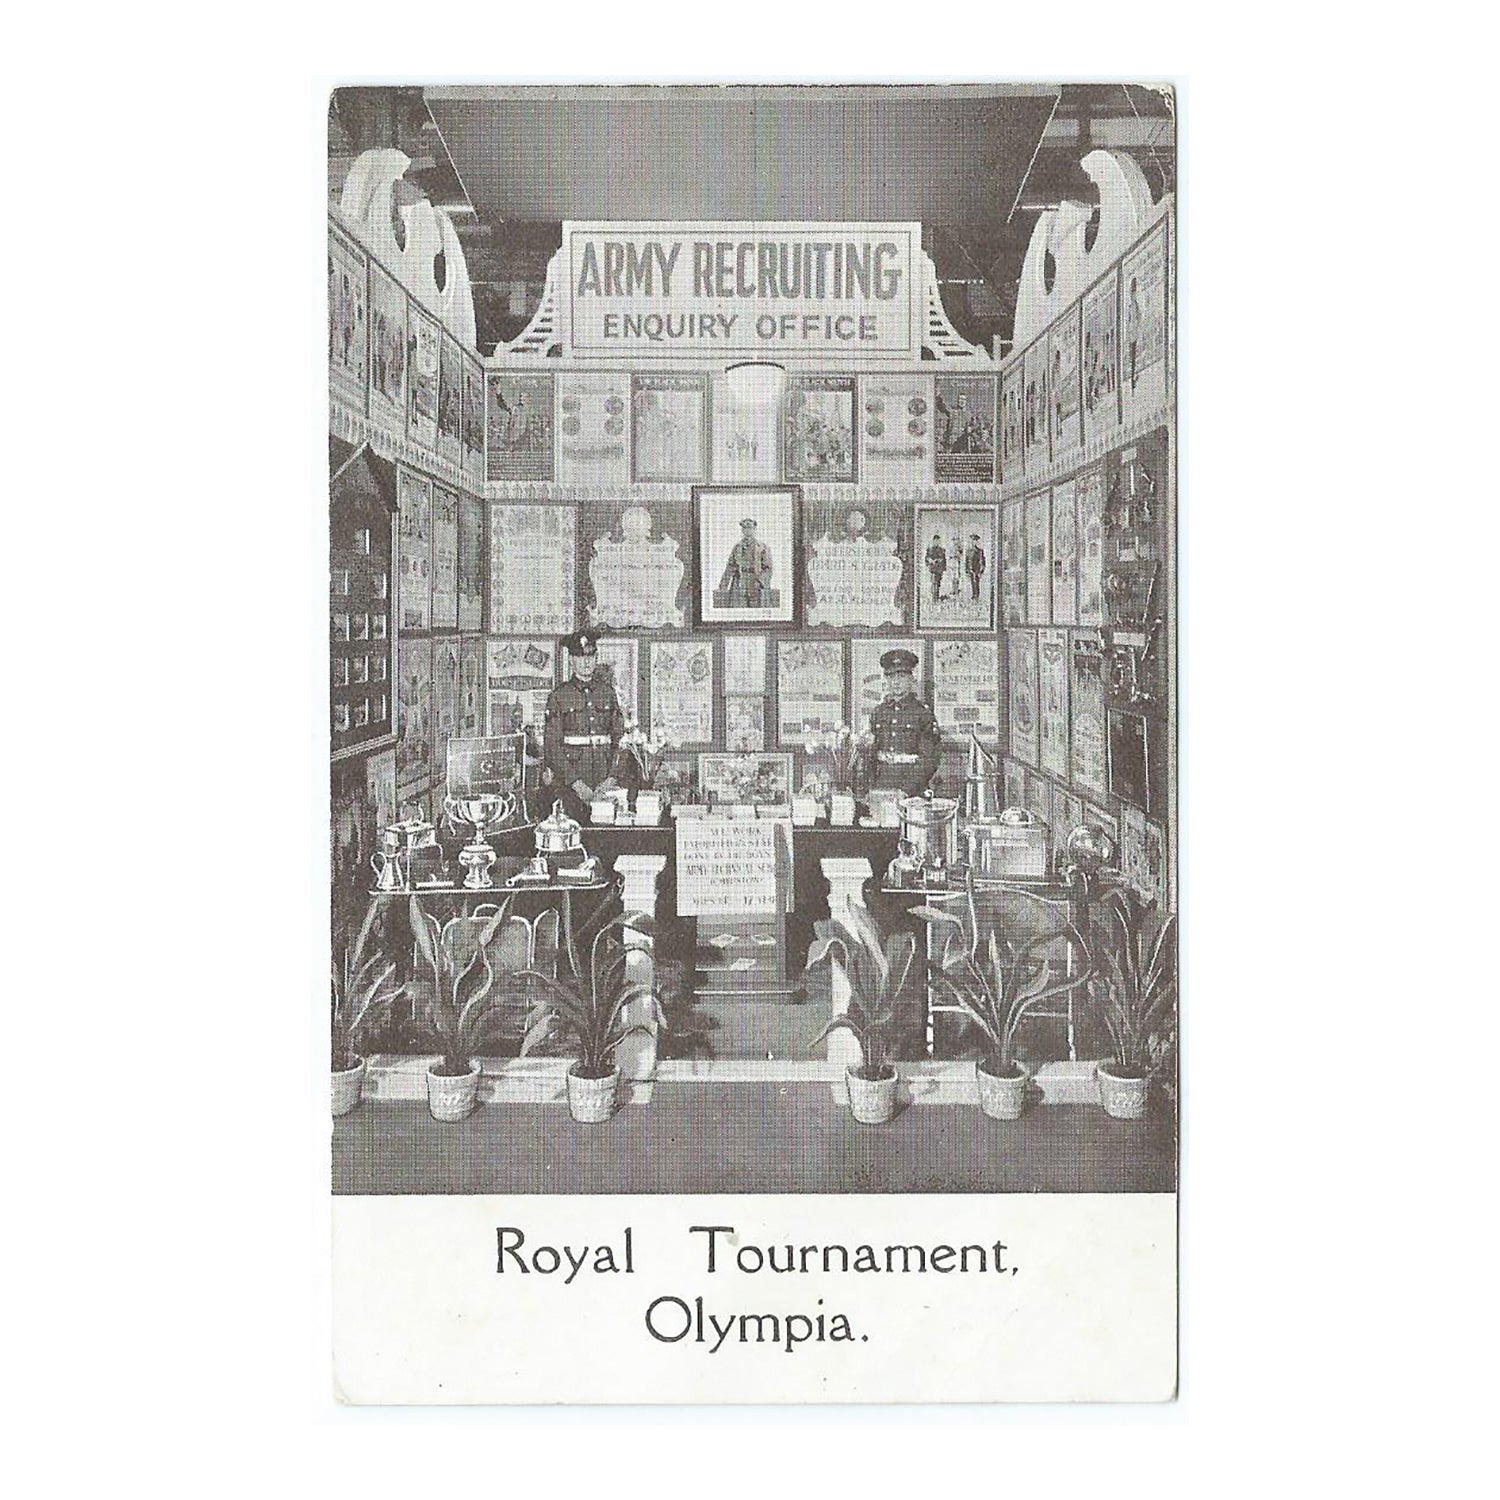 Royal Tournament Olympia, postcard